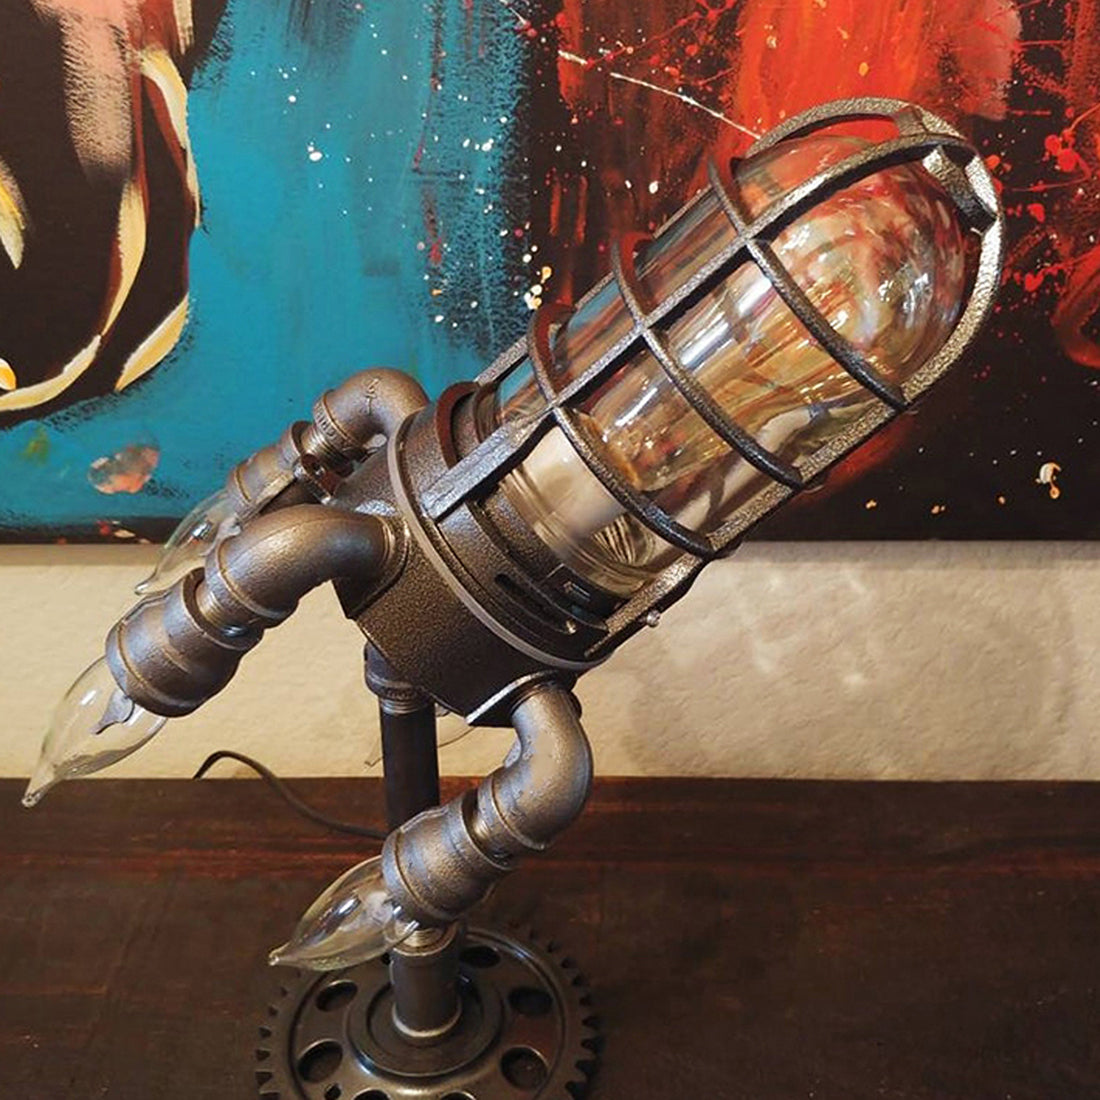 American Industrial Plastic Retro Steam Punk Rocket Lamp